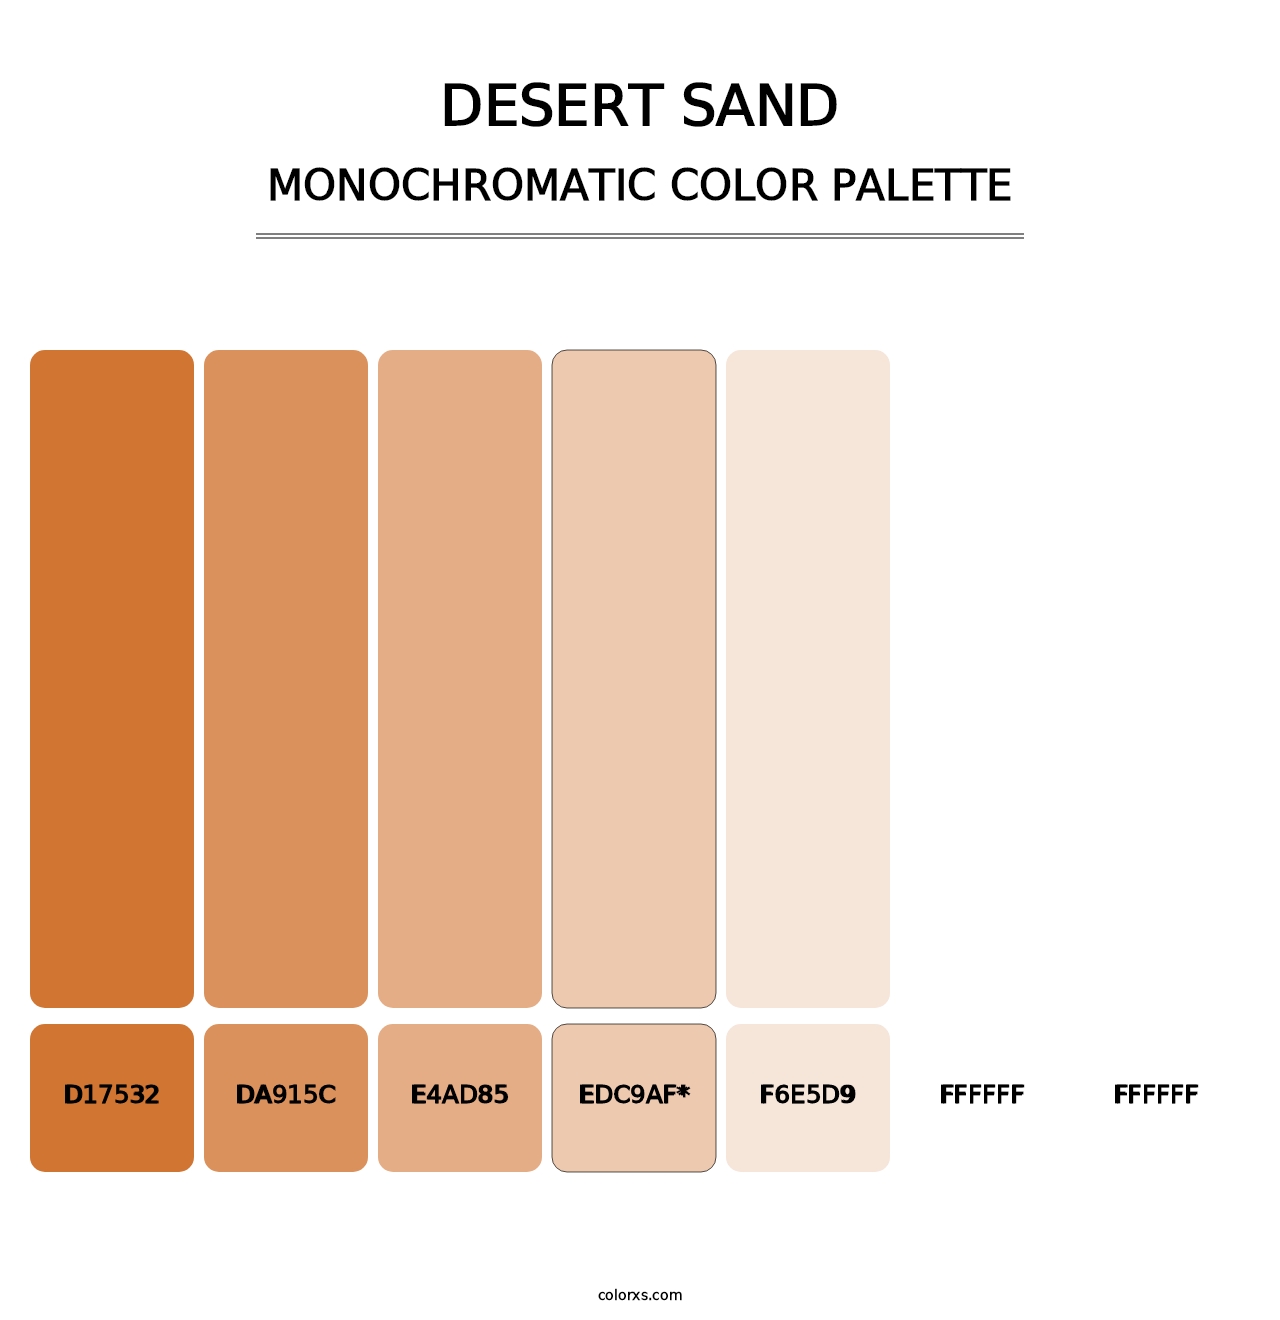 Desert Sand - Monochromatic Color Palette